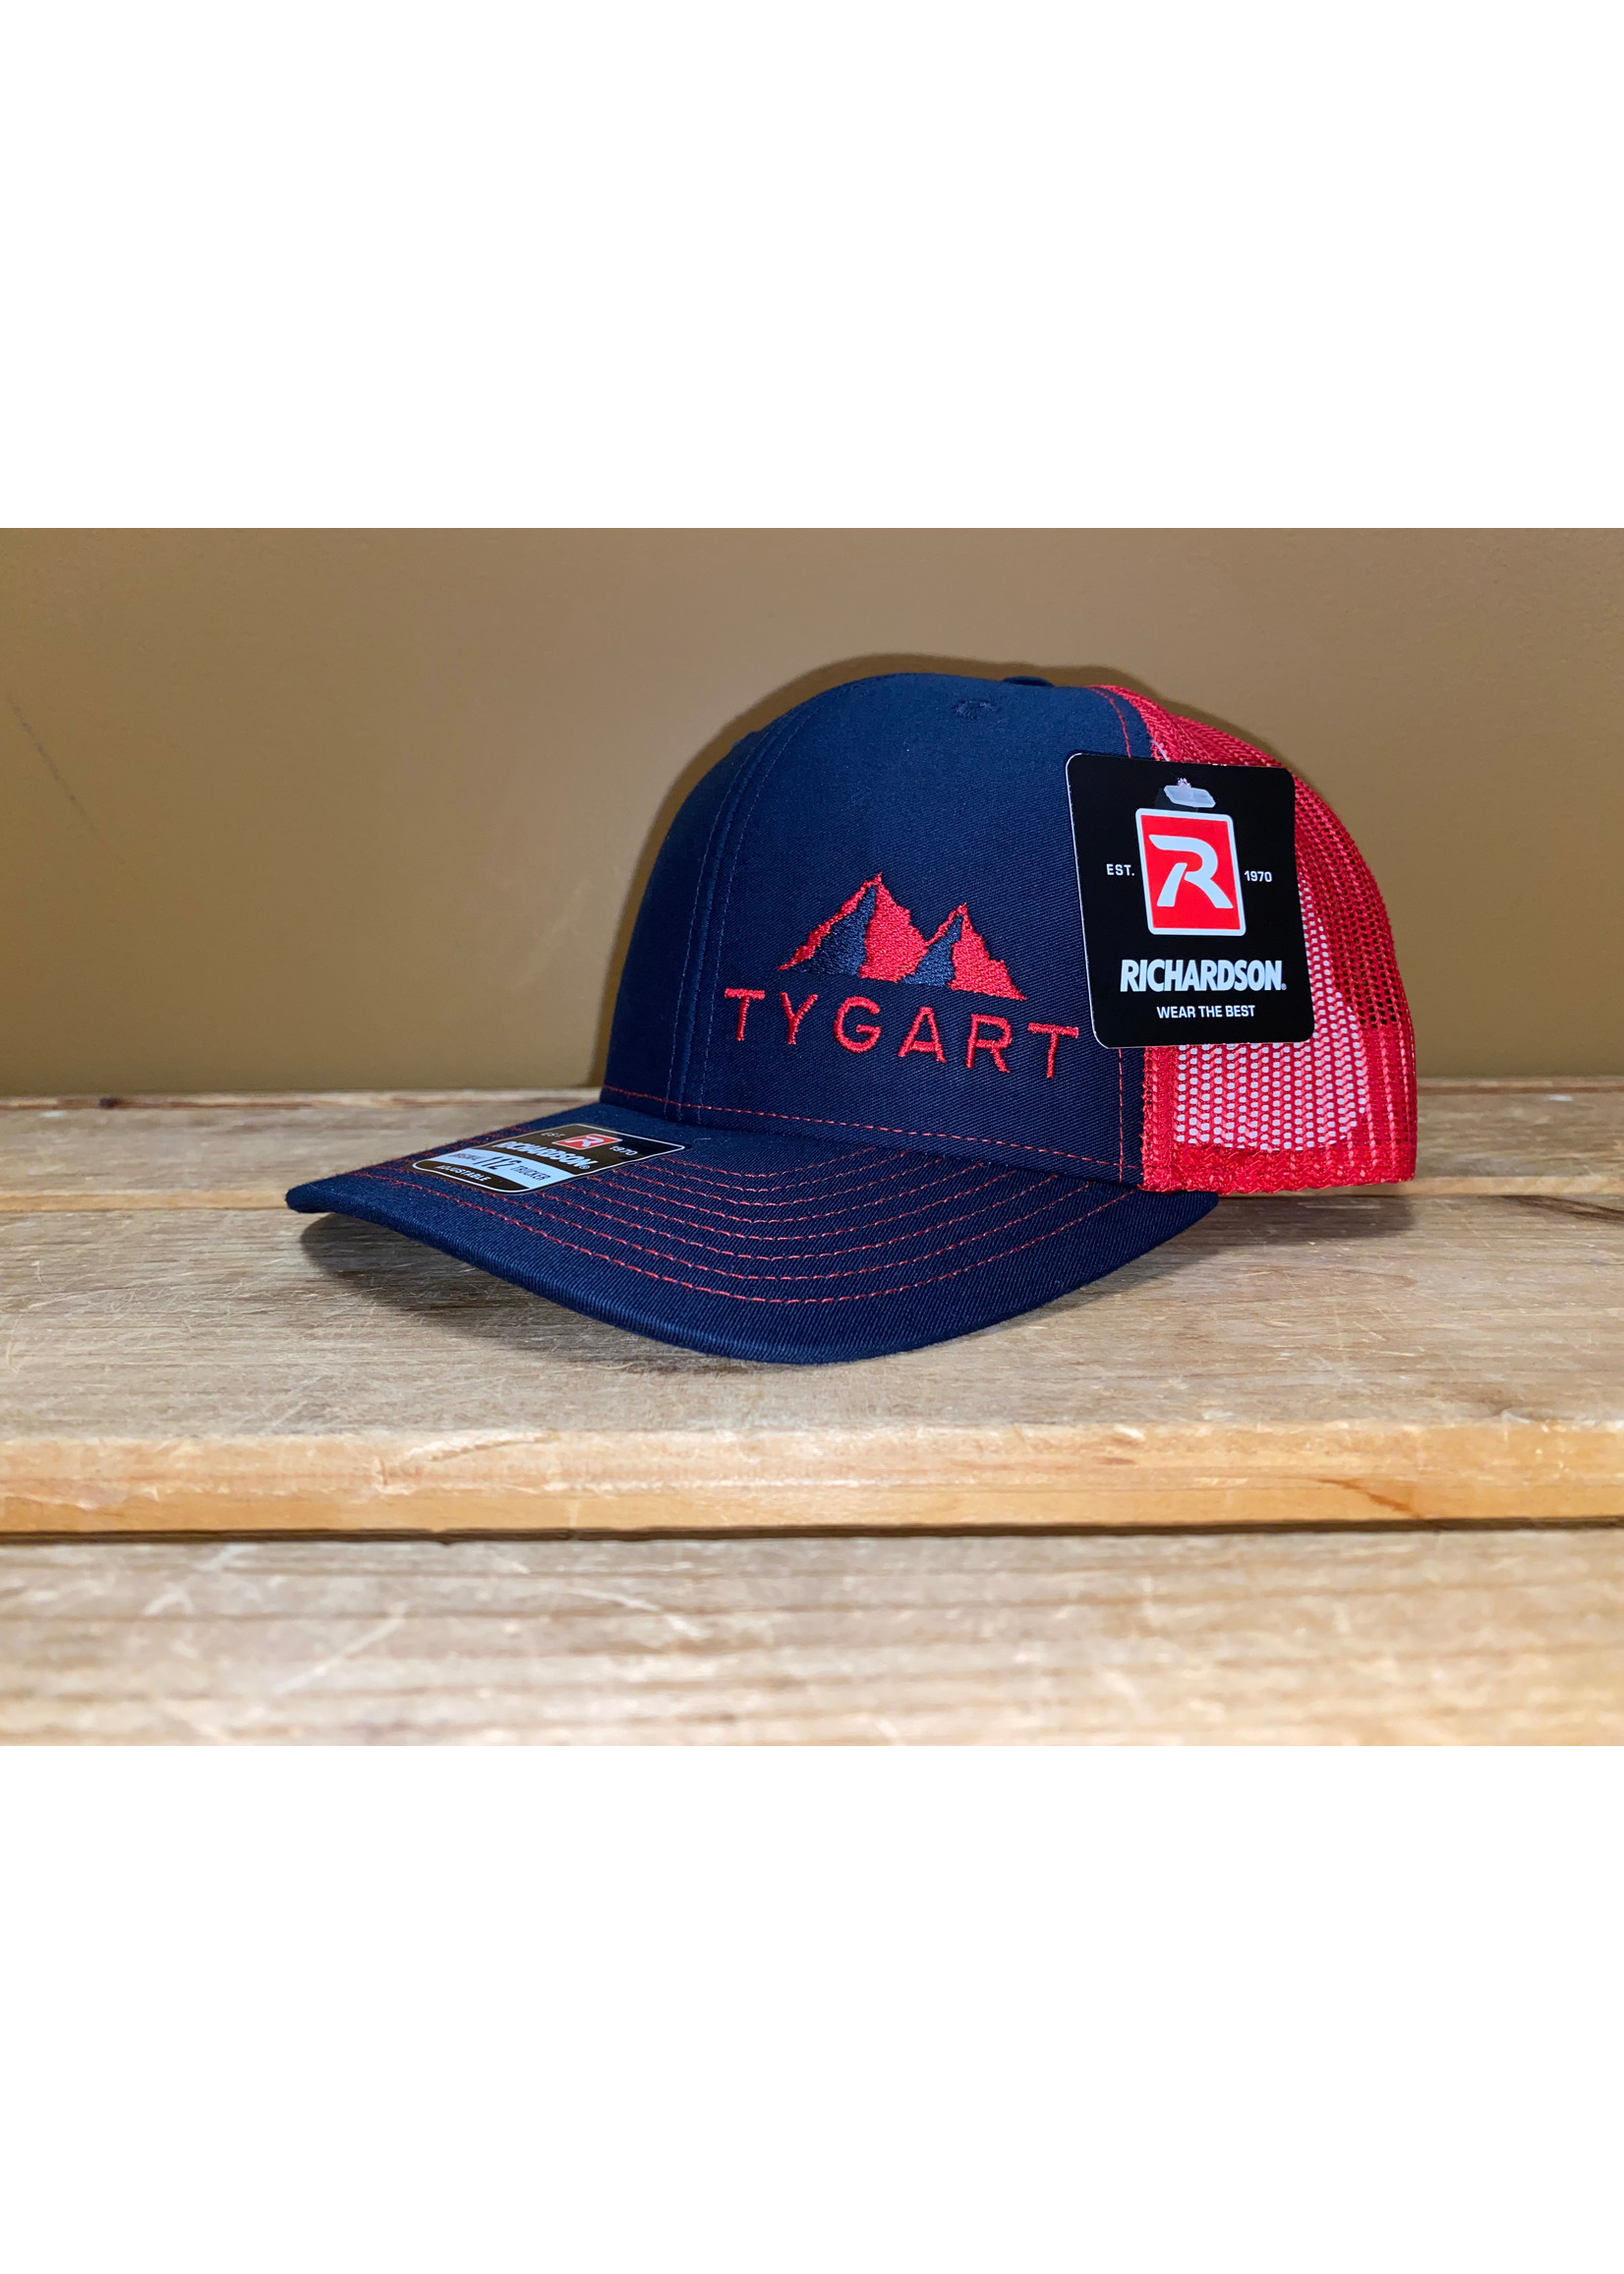 Tygart Trucker Hat